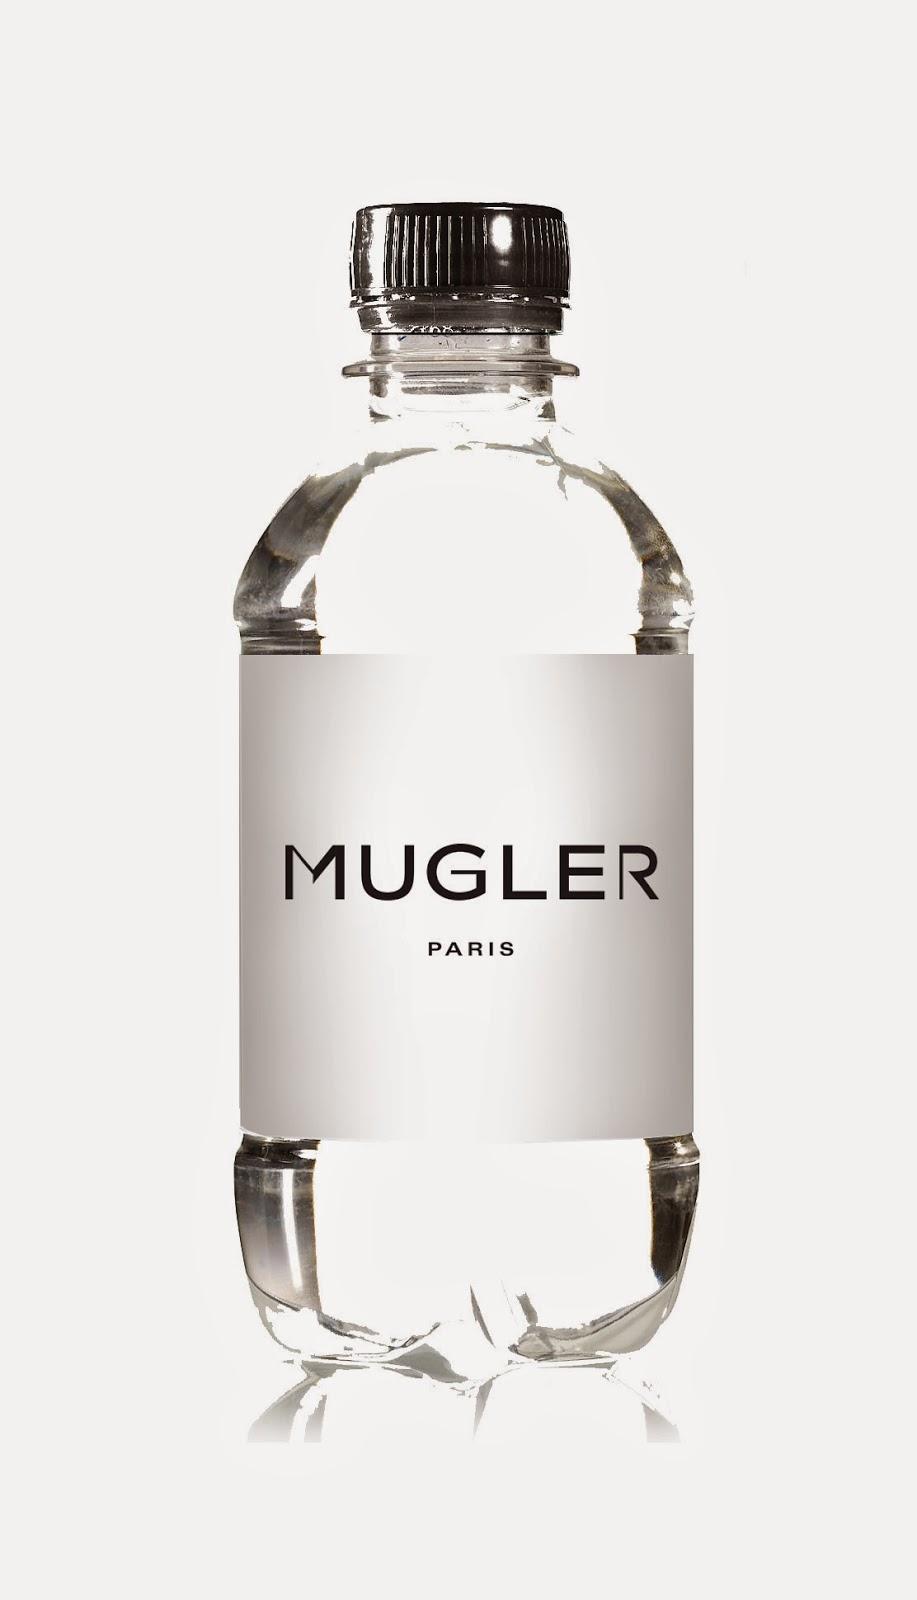 Mugler water by Drinkyz